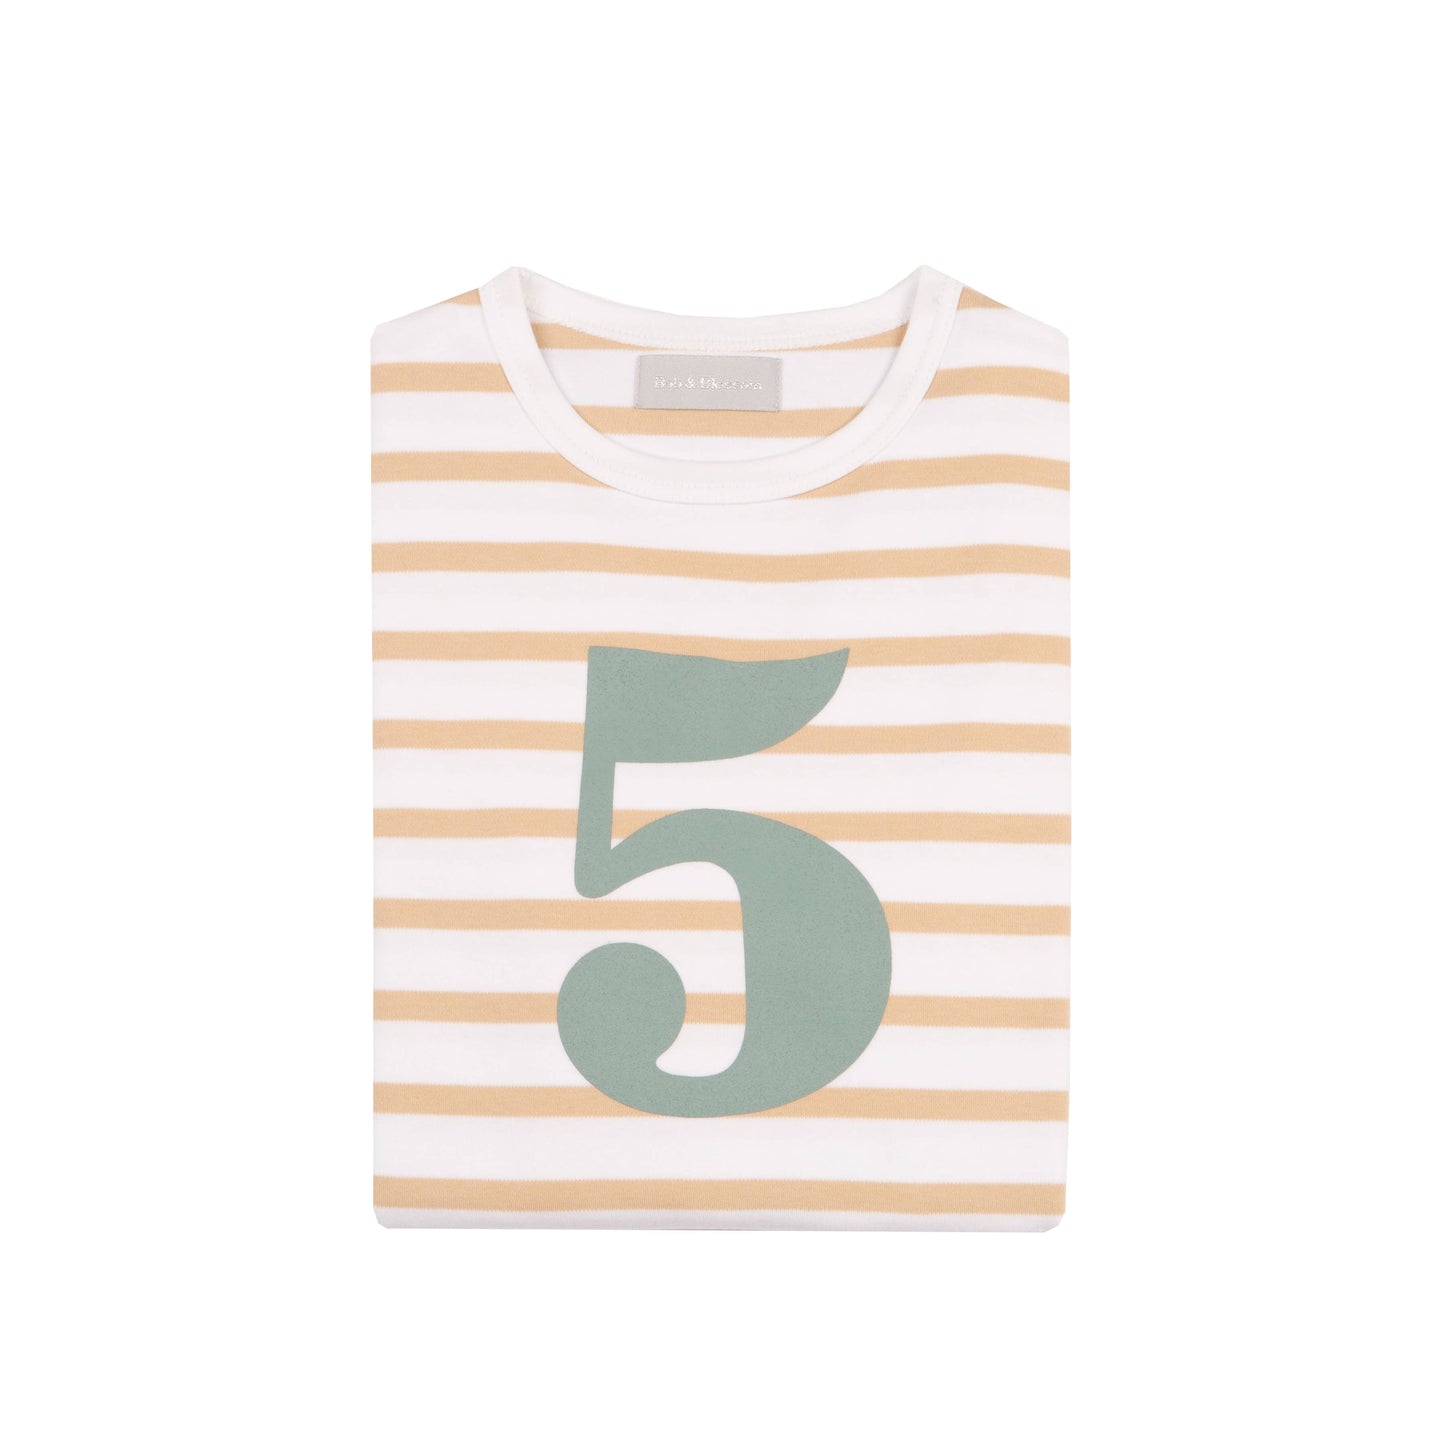 Biscuit & White Striped 5 (Seafoam) Shirt